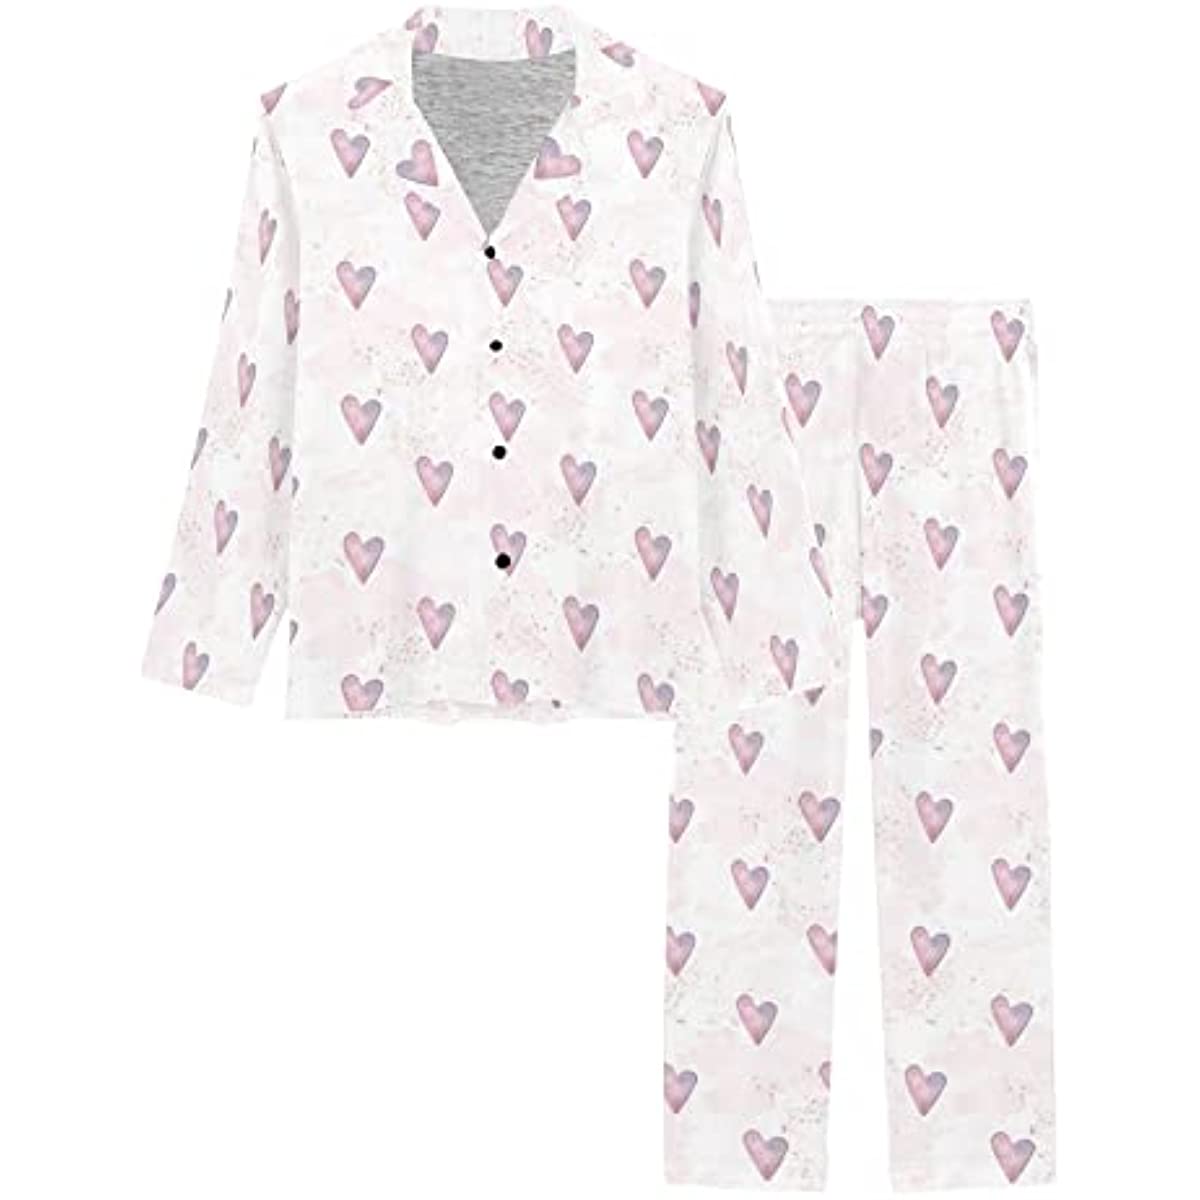 DIYKST Tie Dye Pajamas Set for Women Cute Valentines pj Sets Nightwea